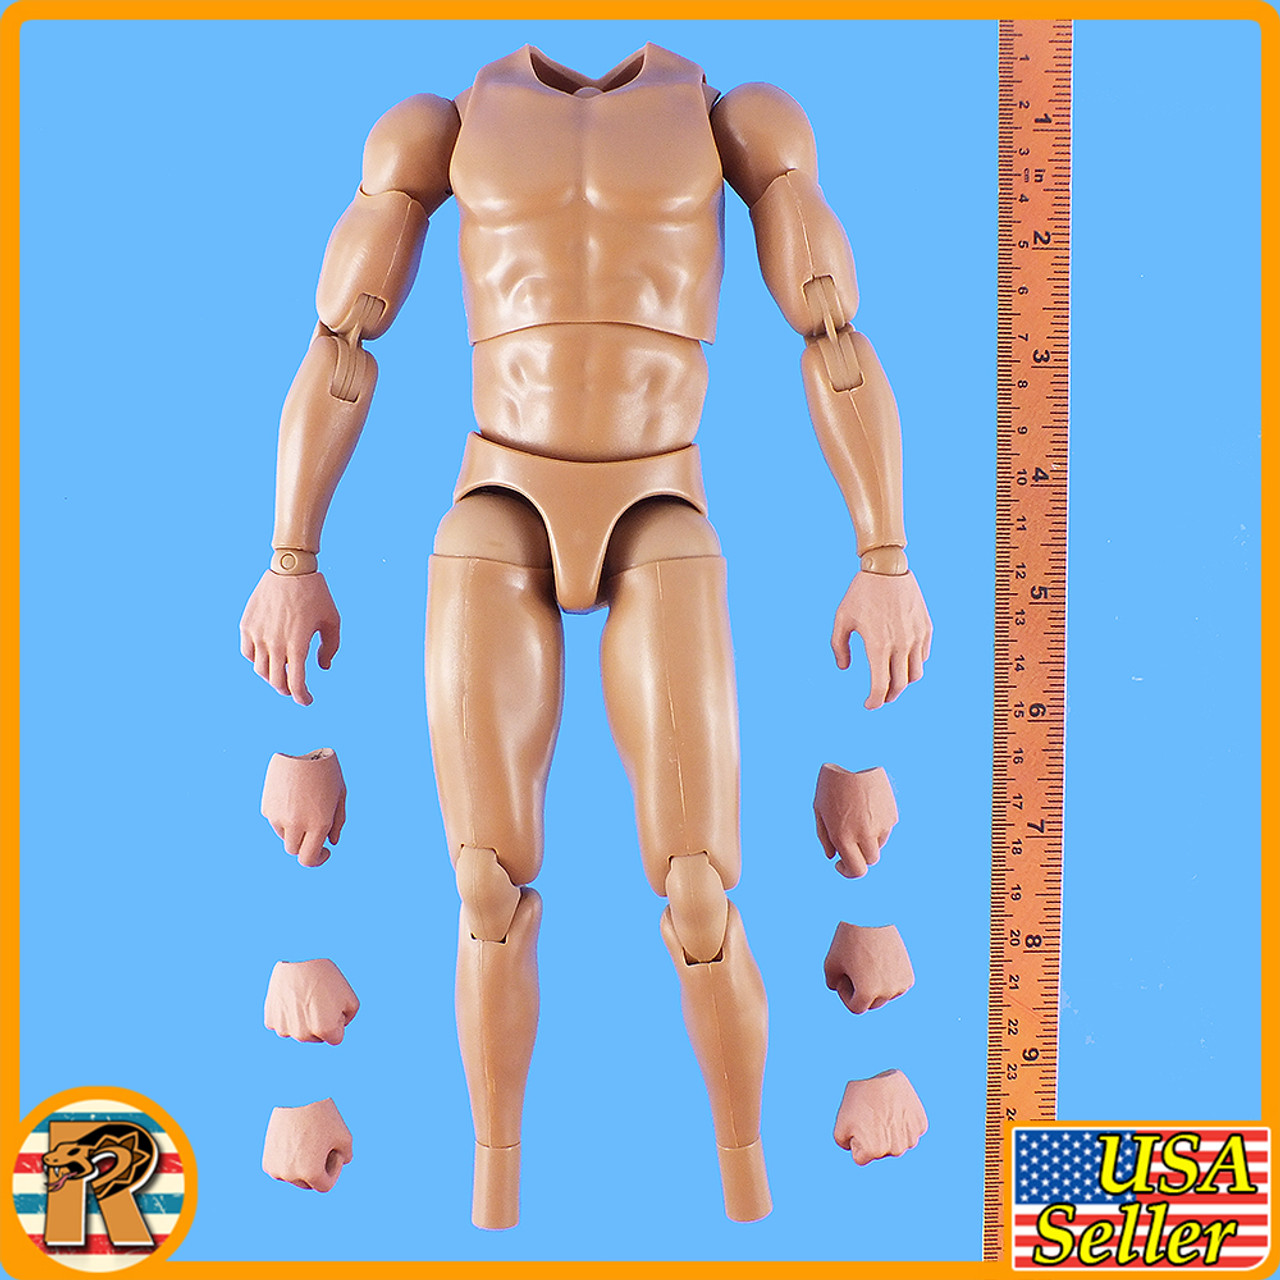 Mike GTA - Nude Body w/ Hands - 1/6 Scale -